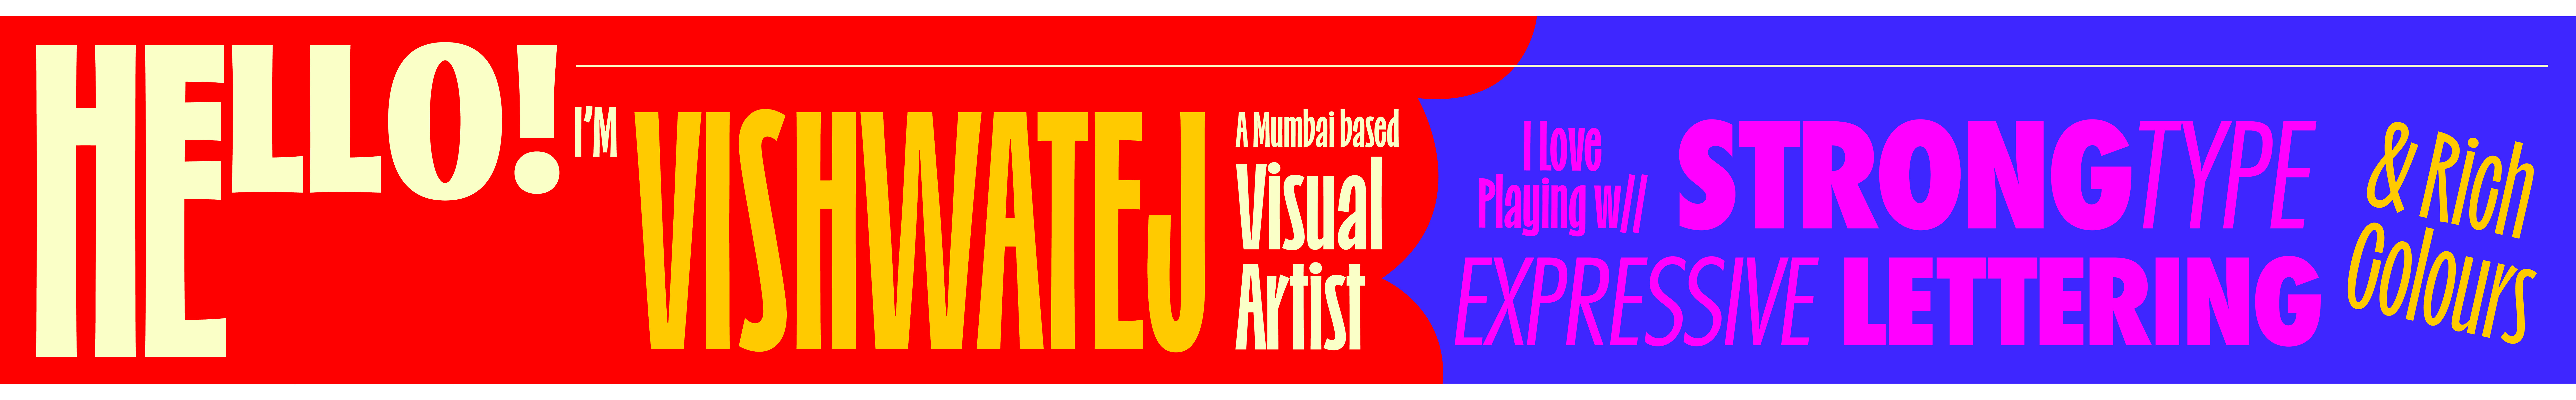 Vishwatej Patil's profile banner